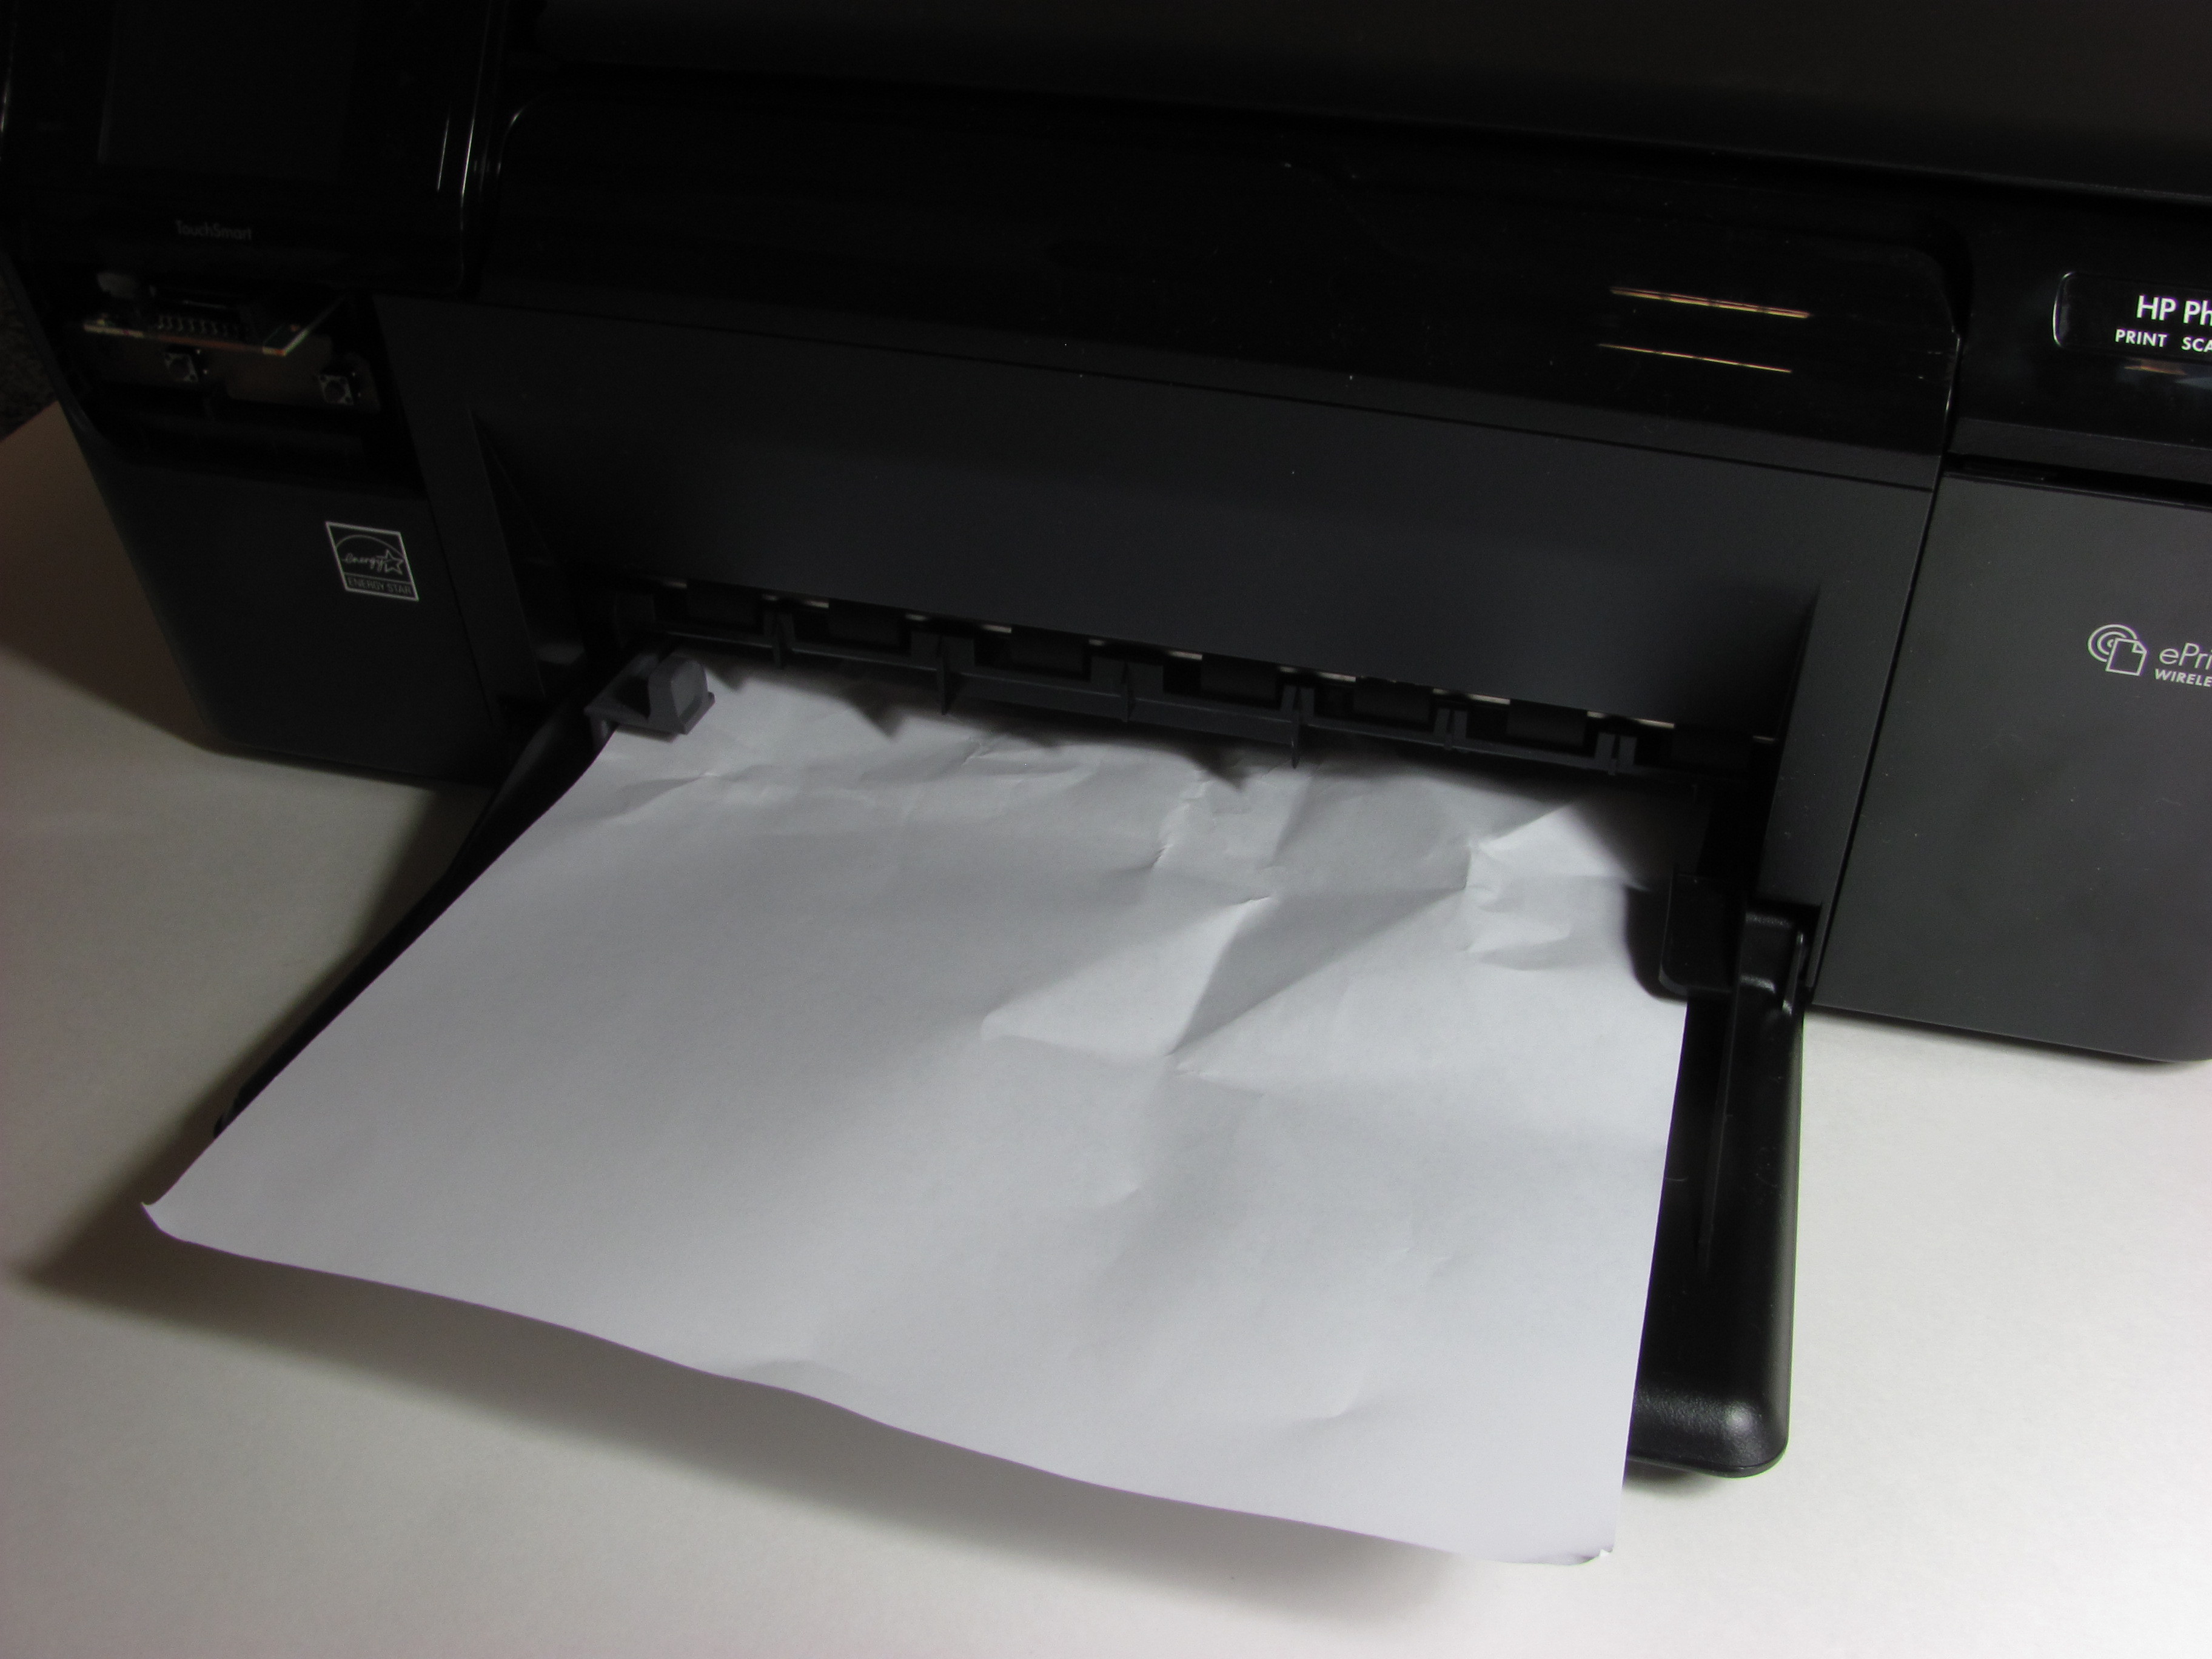 Printer Paper Jams: Causes, Solution, & Prevention - Inkjet